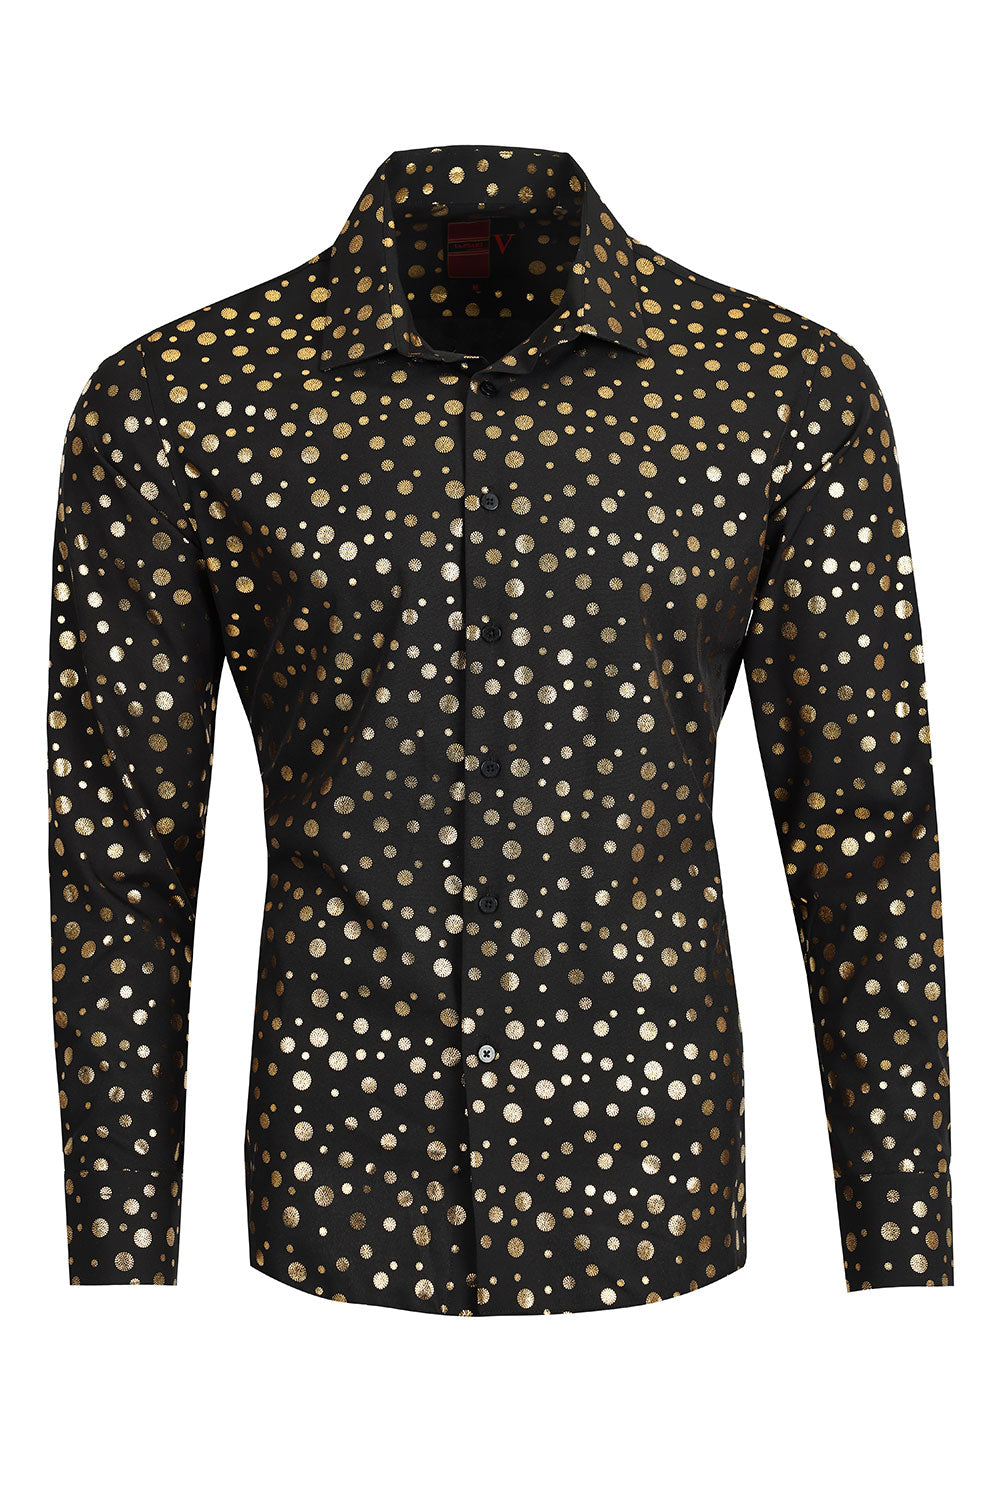 Vassari men's polka dotted printed long sleeve shirts 2VS140